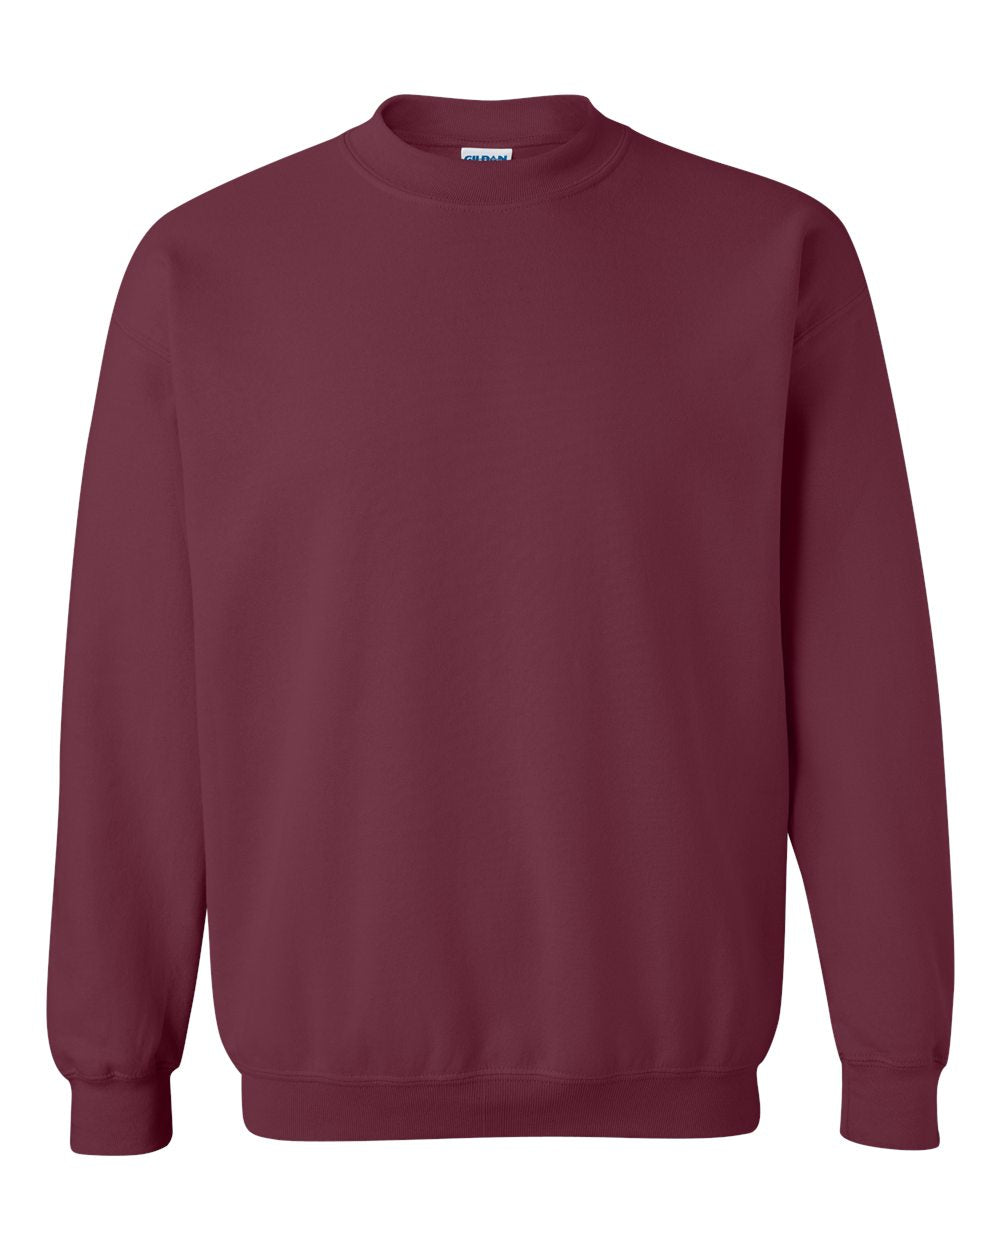 Gildan Adult Crew Fleece- Custom Grandma/Mom Sweatshirt With Names: Brown Floral (Made To Order)